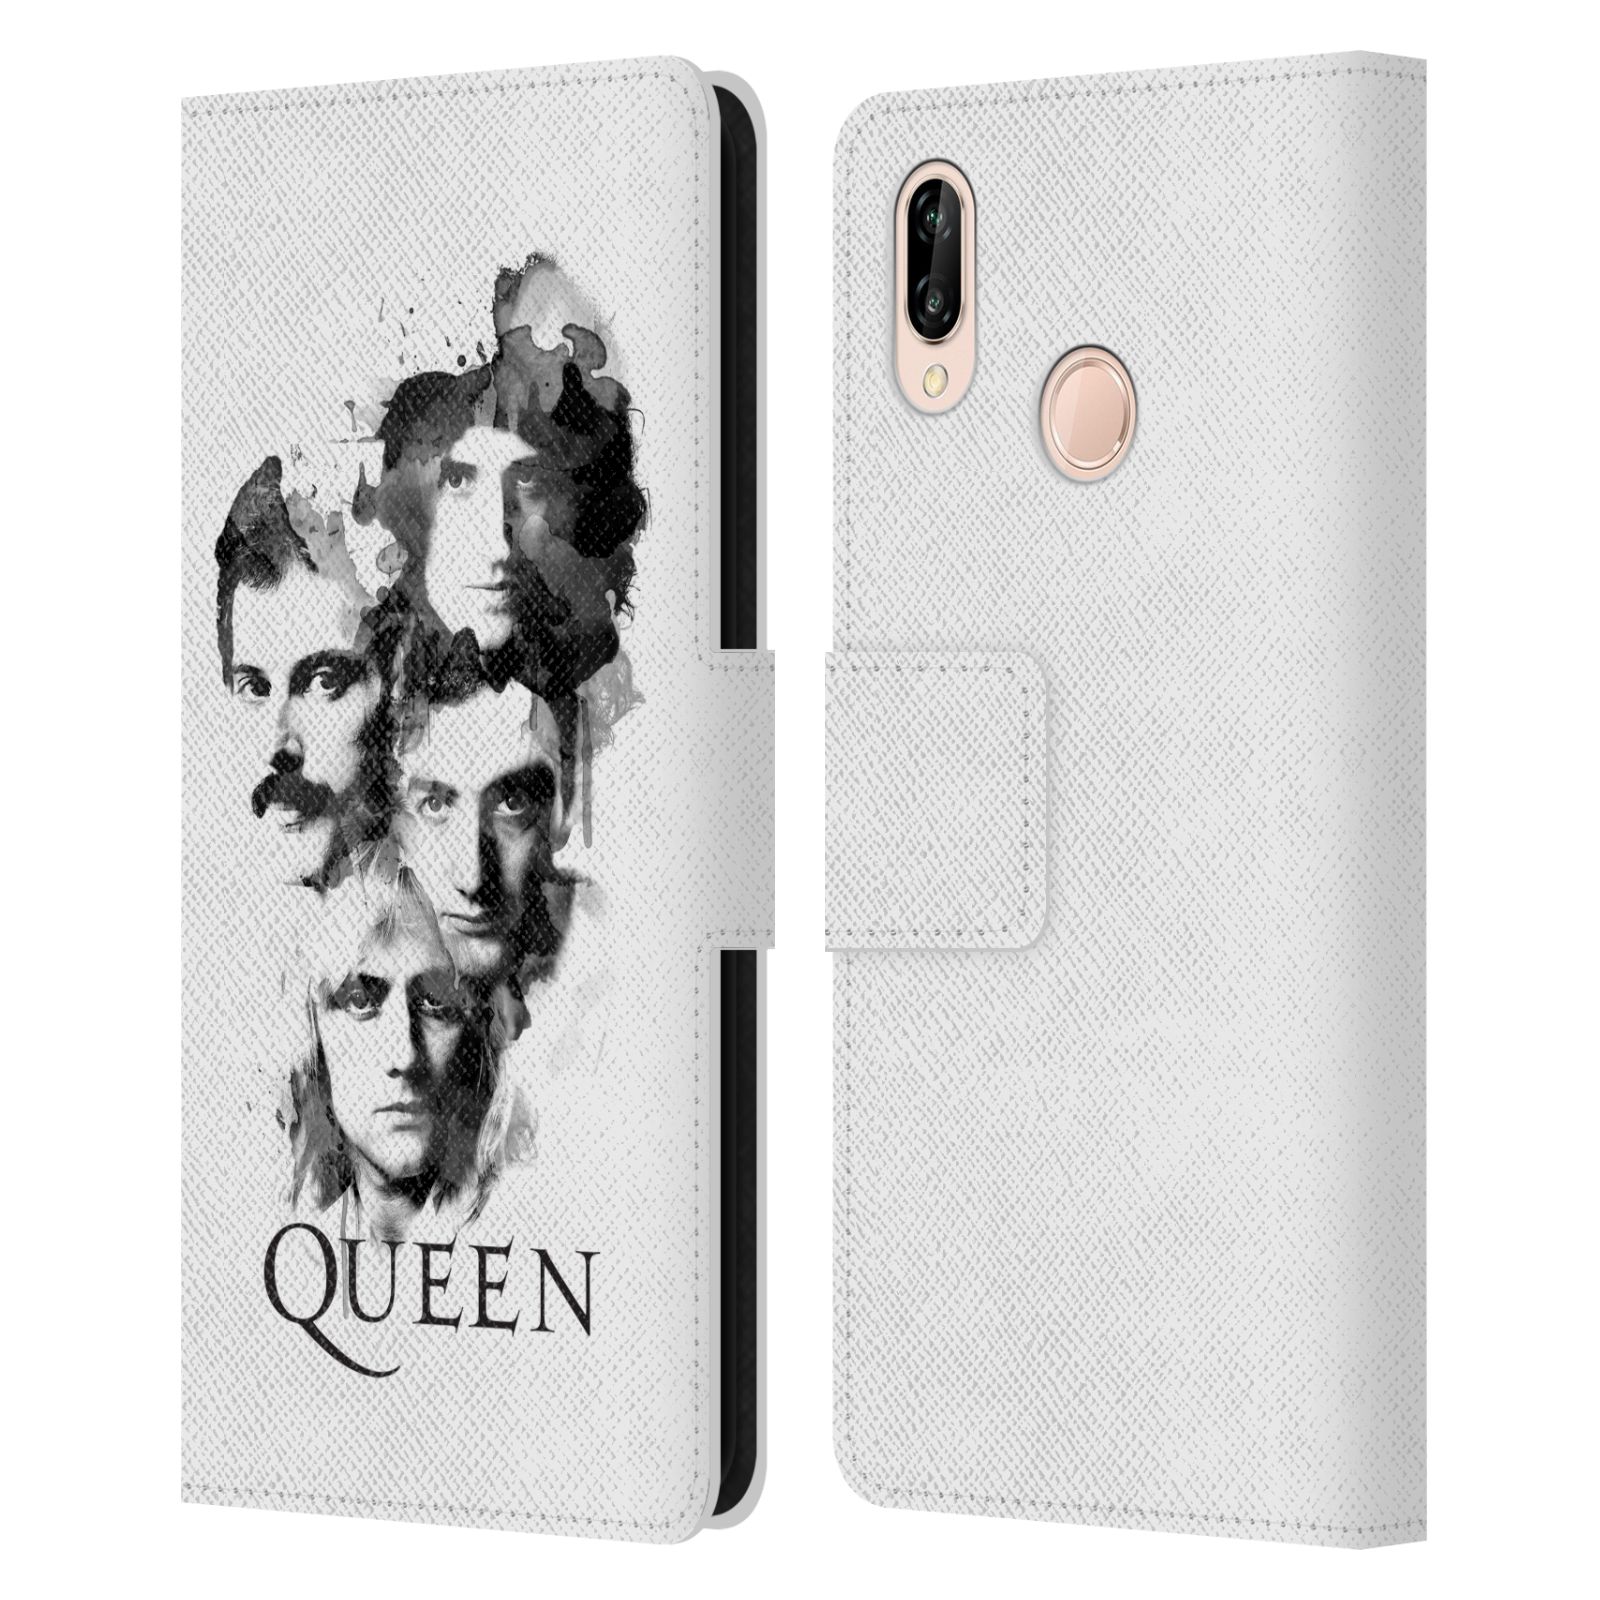 Pouzdro HEAD CASE pro mobil Huawei P20 LITE - Rocková skupina Queen navždy